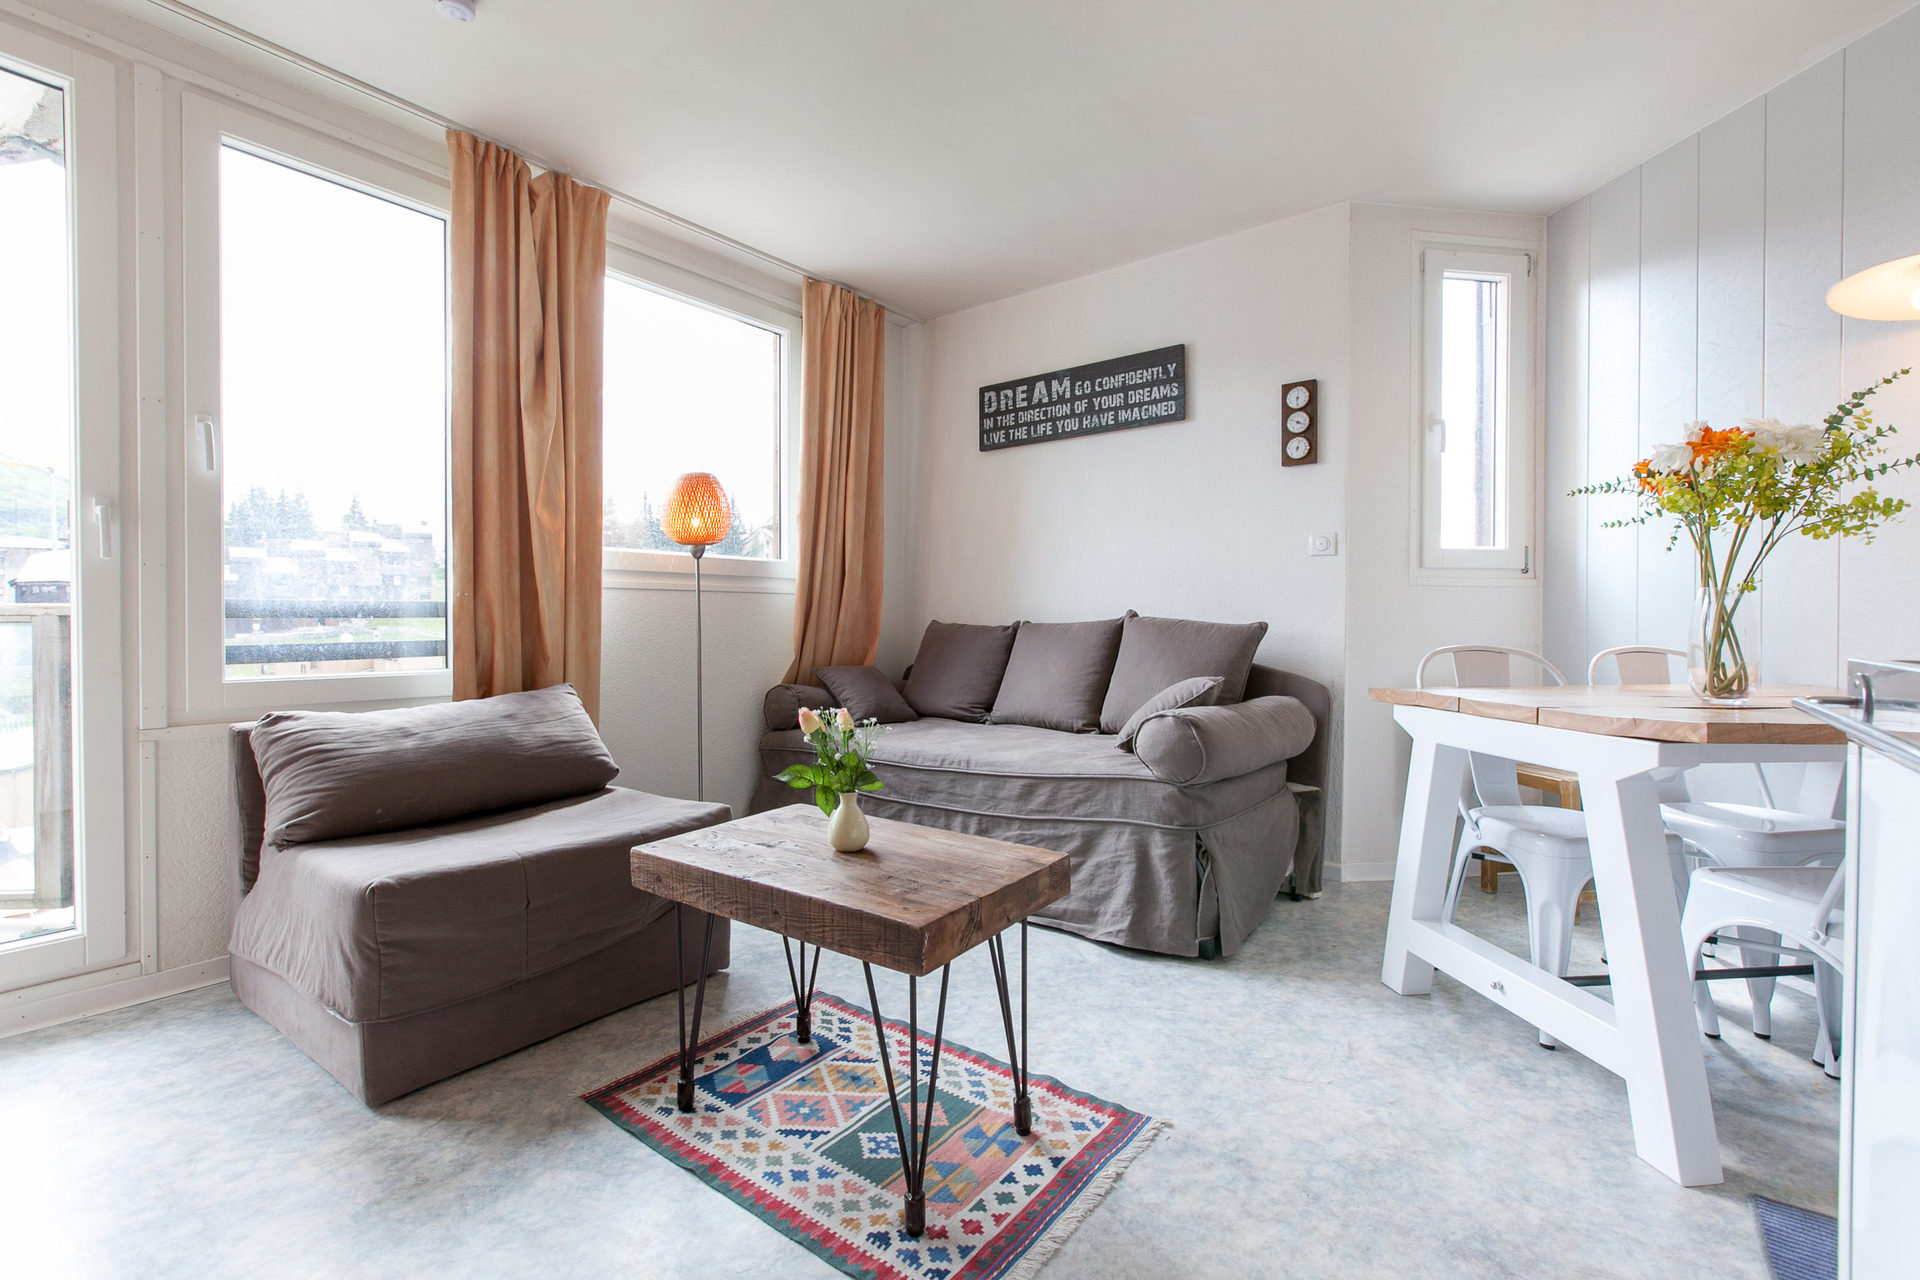 Rent a 2-rooms-(1-bedroom) at Avoriaz